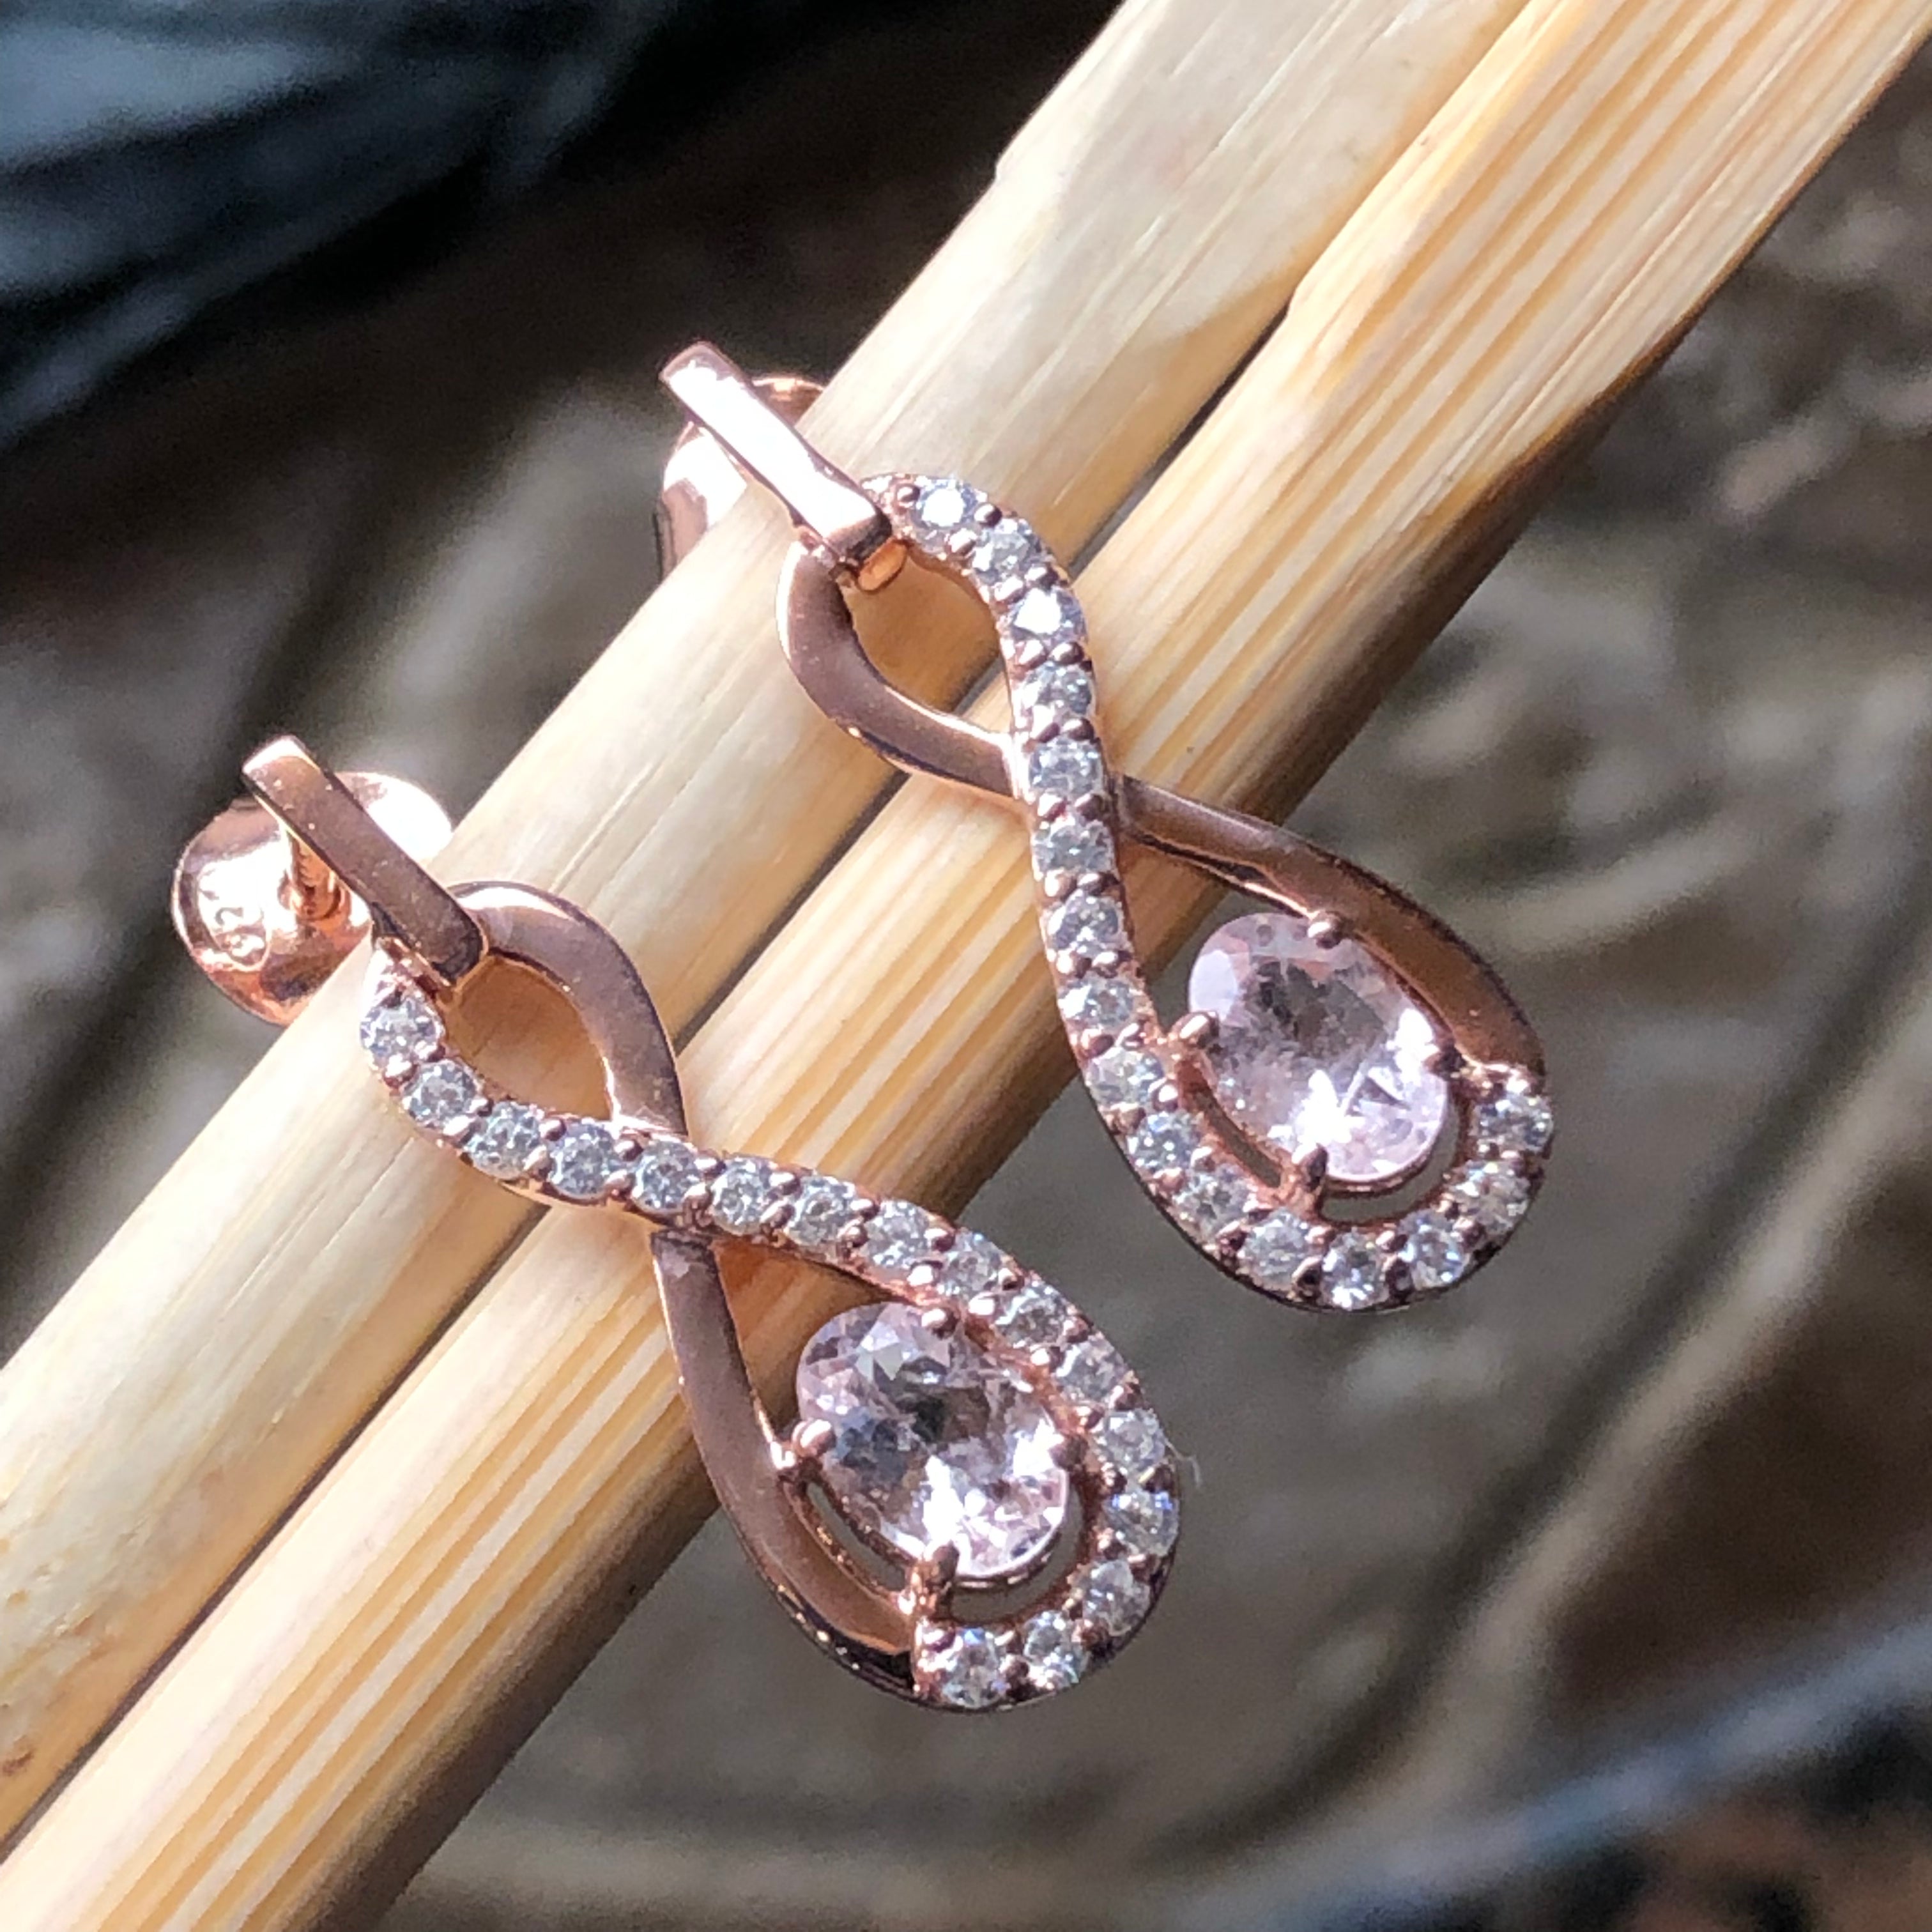 Natural Peach Morganite 14k Rose Gold Over Sterling Silver Earrings 24mm - Natural Rocks by Kala